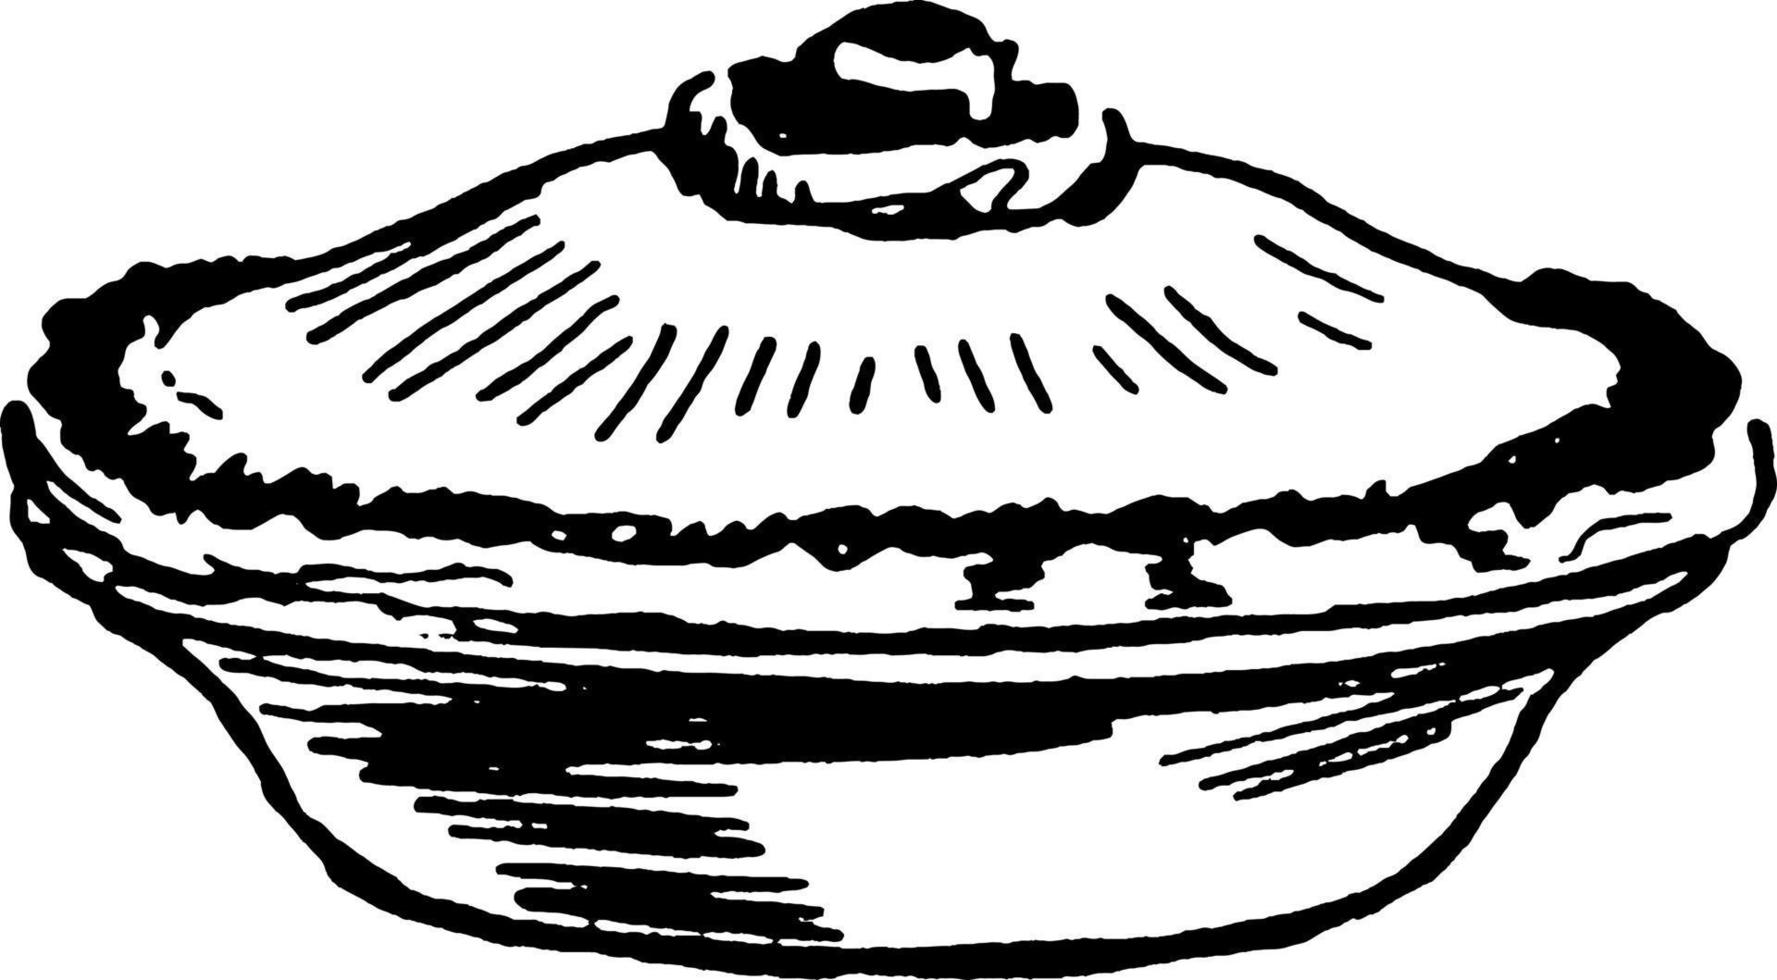 Pie, vintage illustration vector